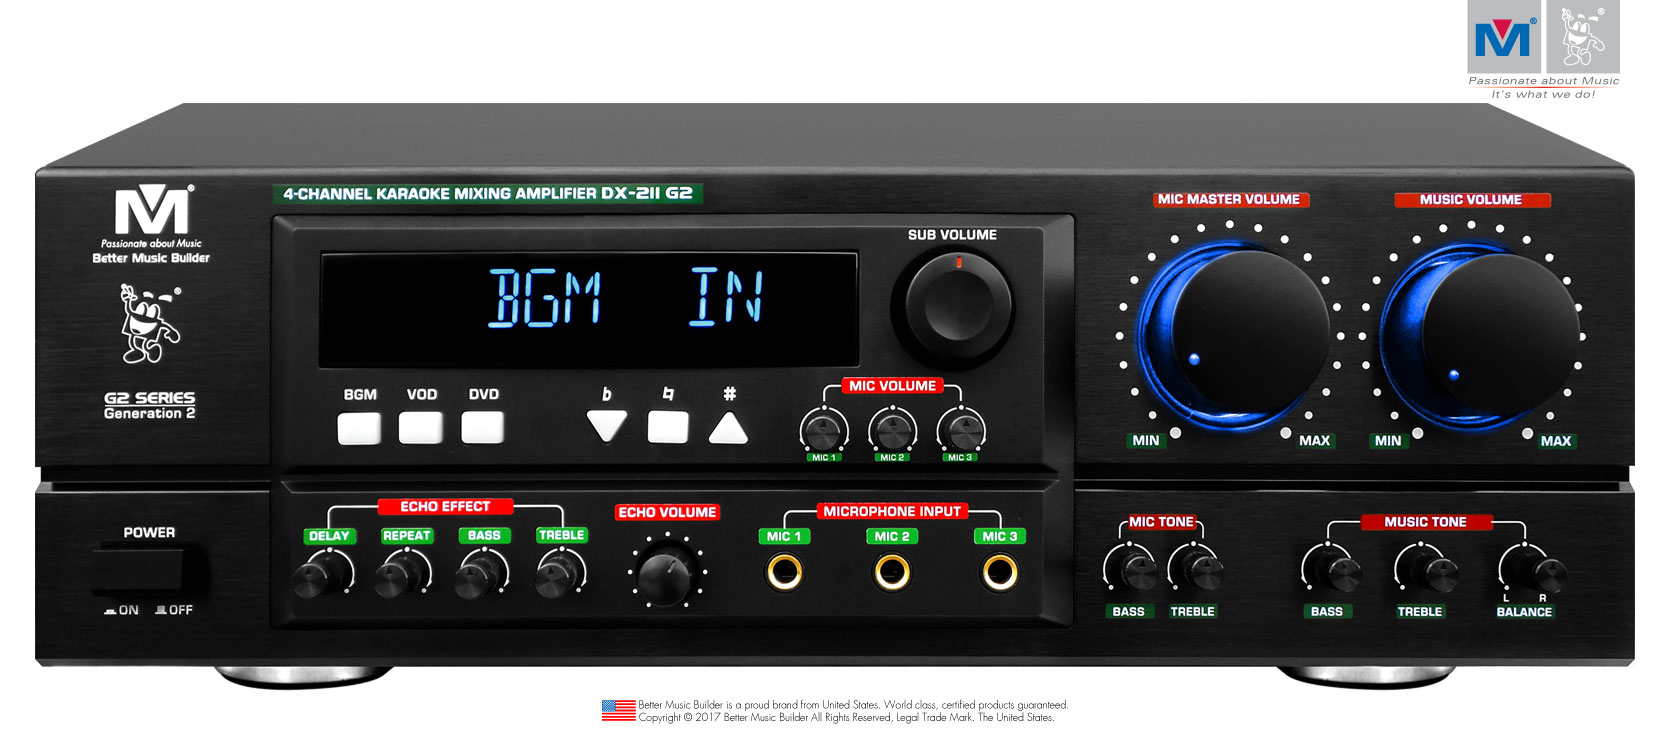 Better Music Builder (M) DX-211 G2 500W Karaoke Mixing Amplifier